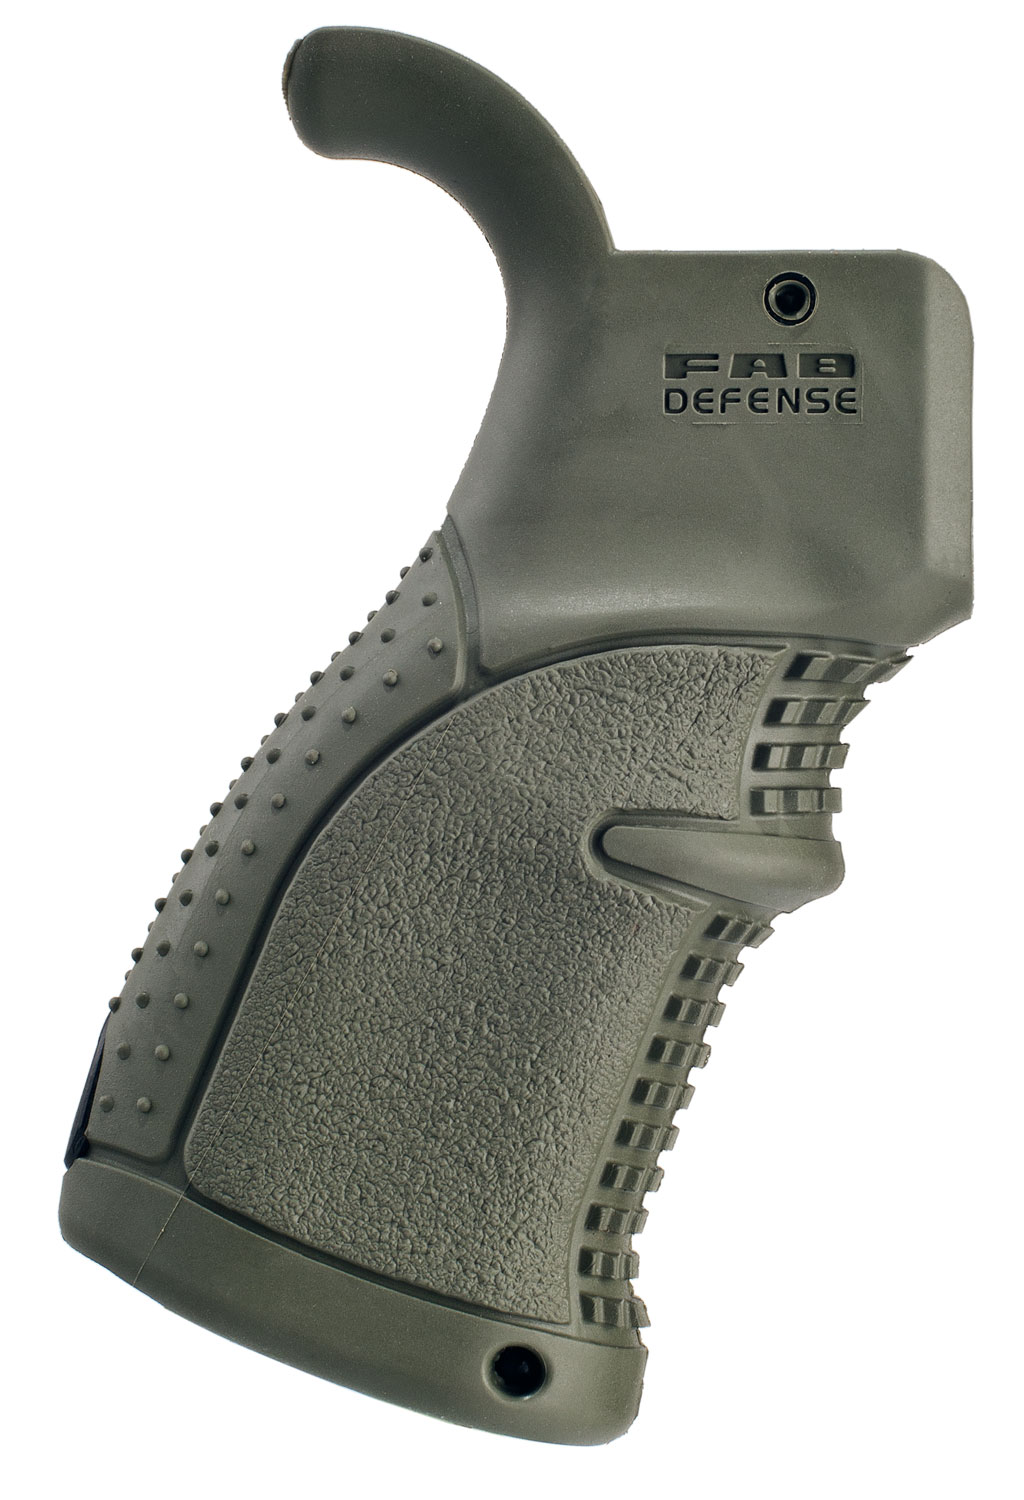 FAB DEFENSE (USIQ) FX-AGR43G AGR-43 Ergonomic Pistol Grip M4/M16/AR15 Polymer with Over-Molded Rubber OD Green